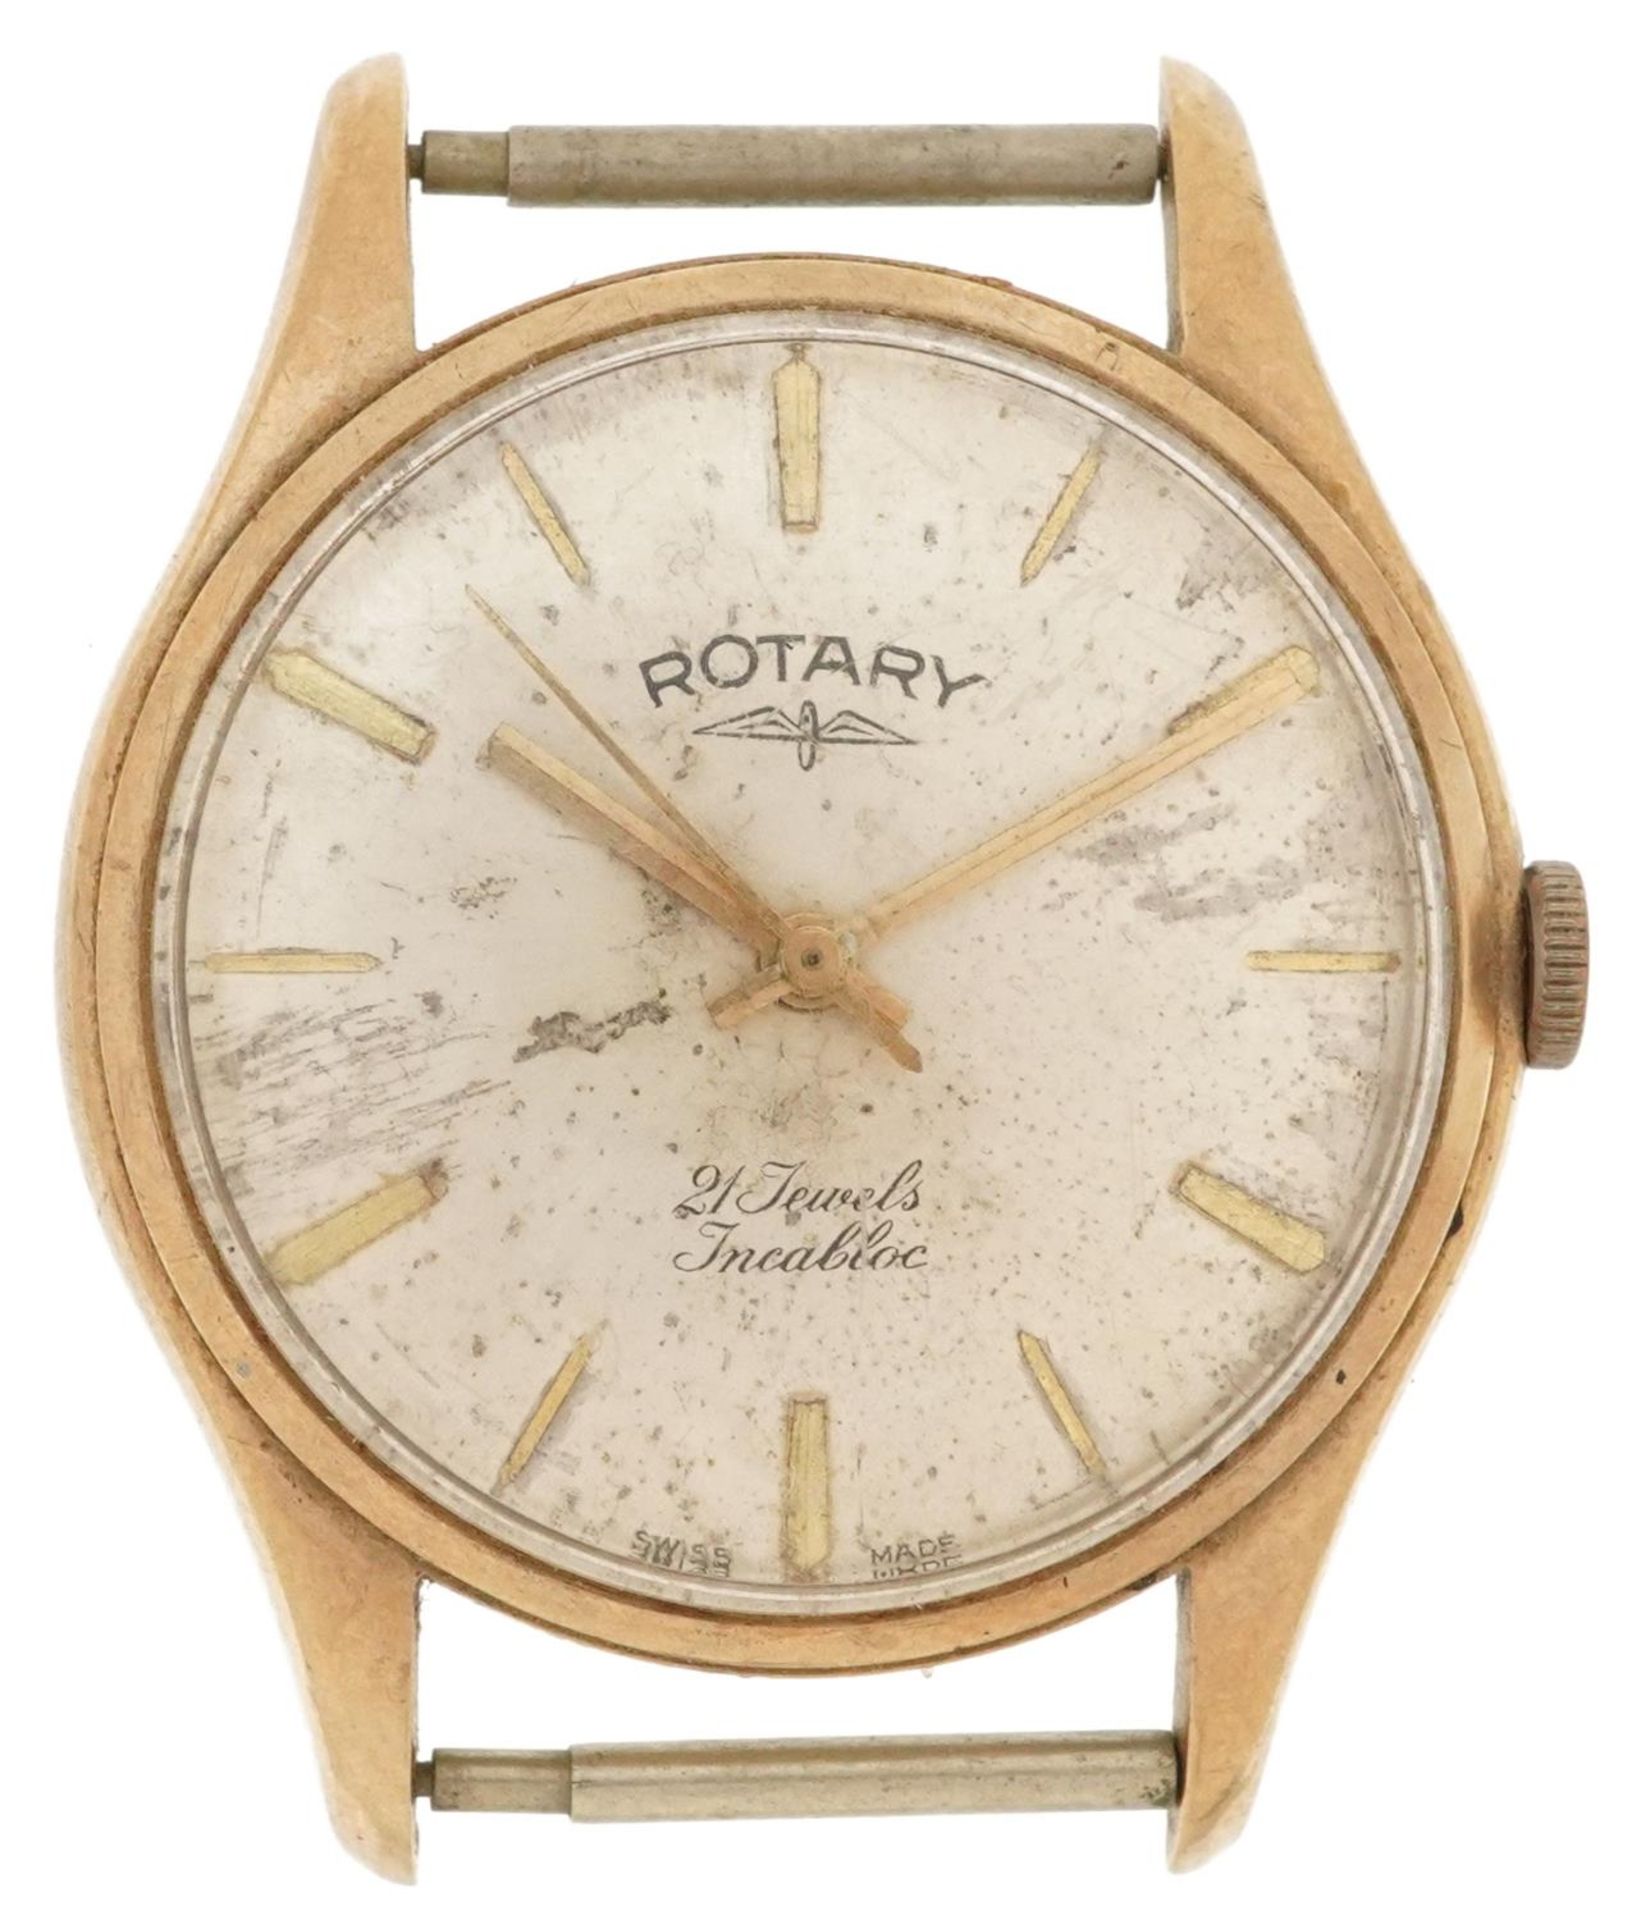 Rotary, gentlemen's 9ct gold manual wind wristwatch, 33mm in diameter, 24.8g